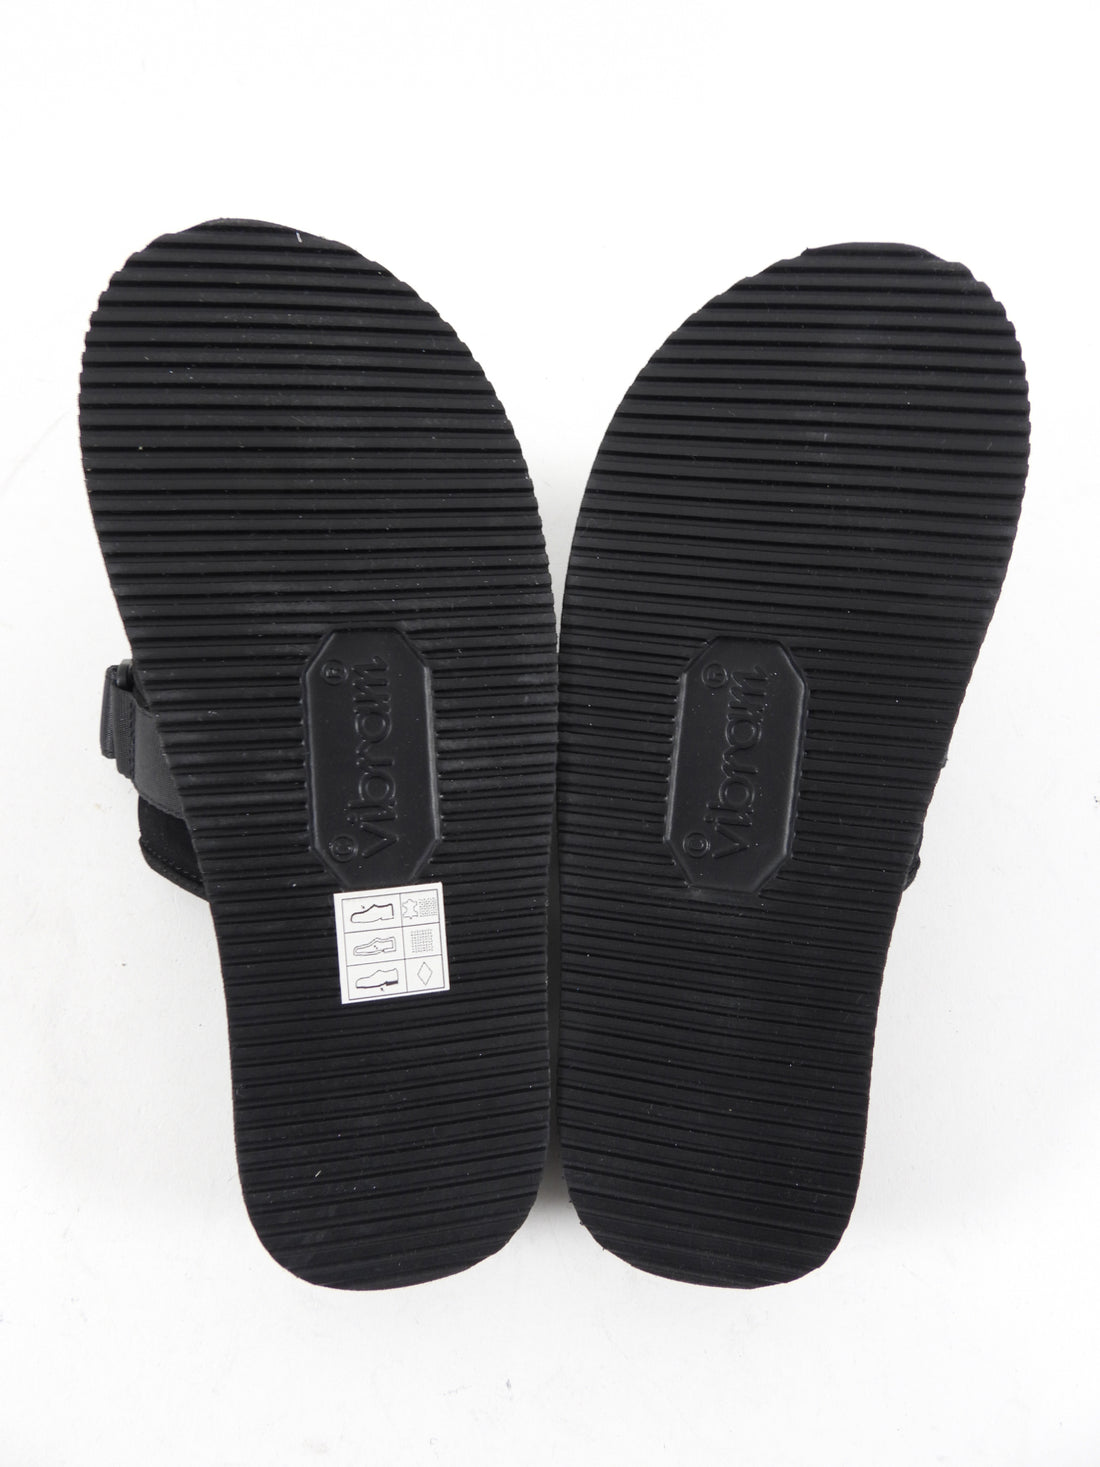 Suicoke Black Sandal Slides - USA 6